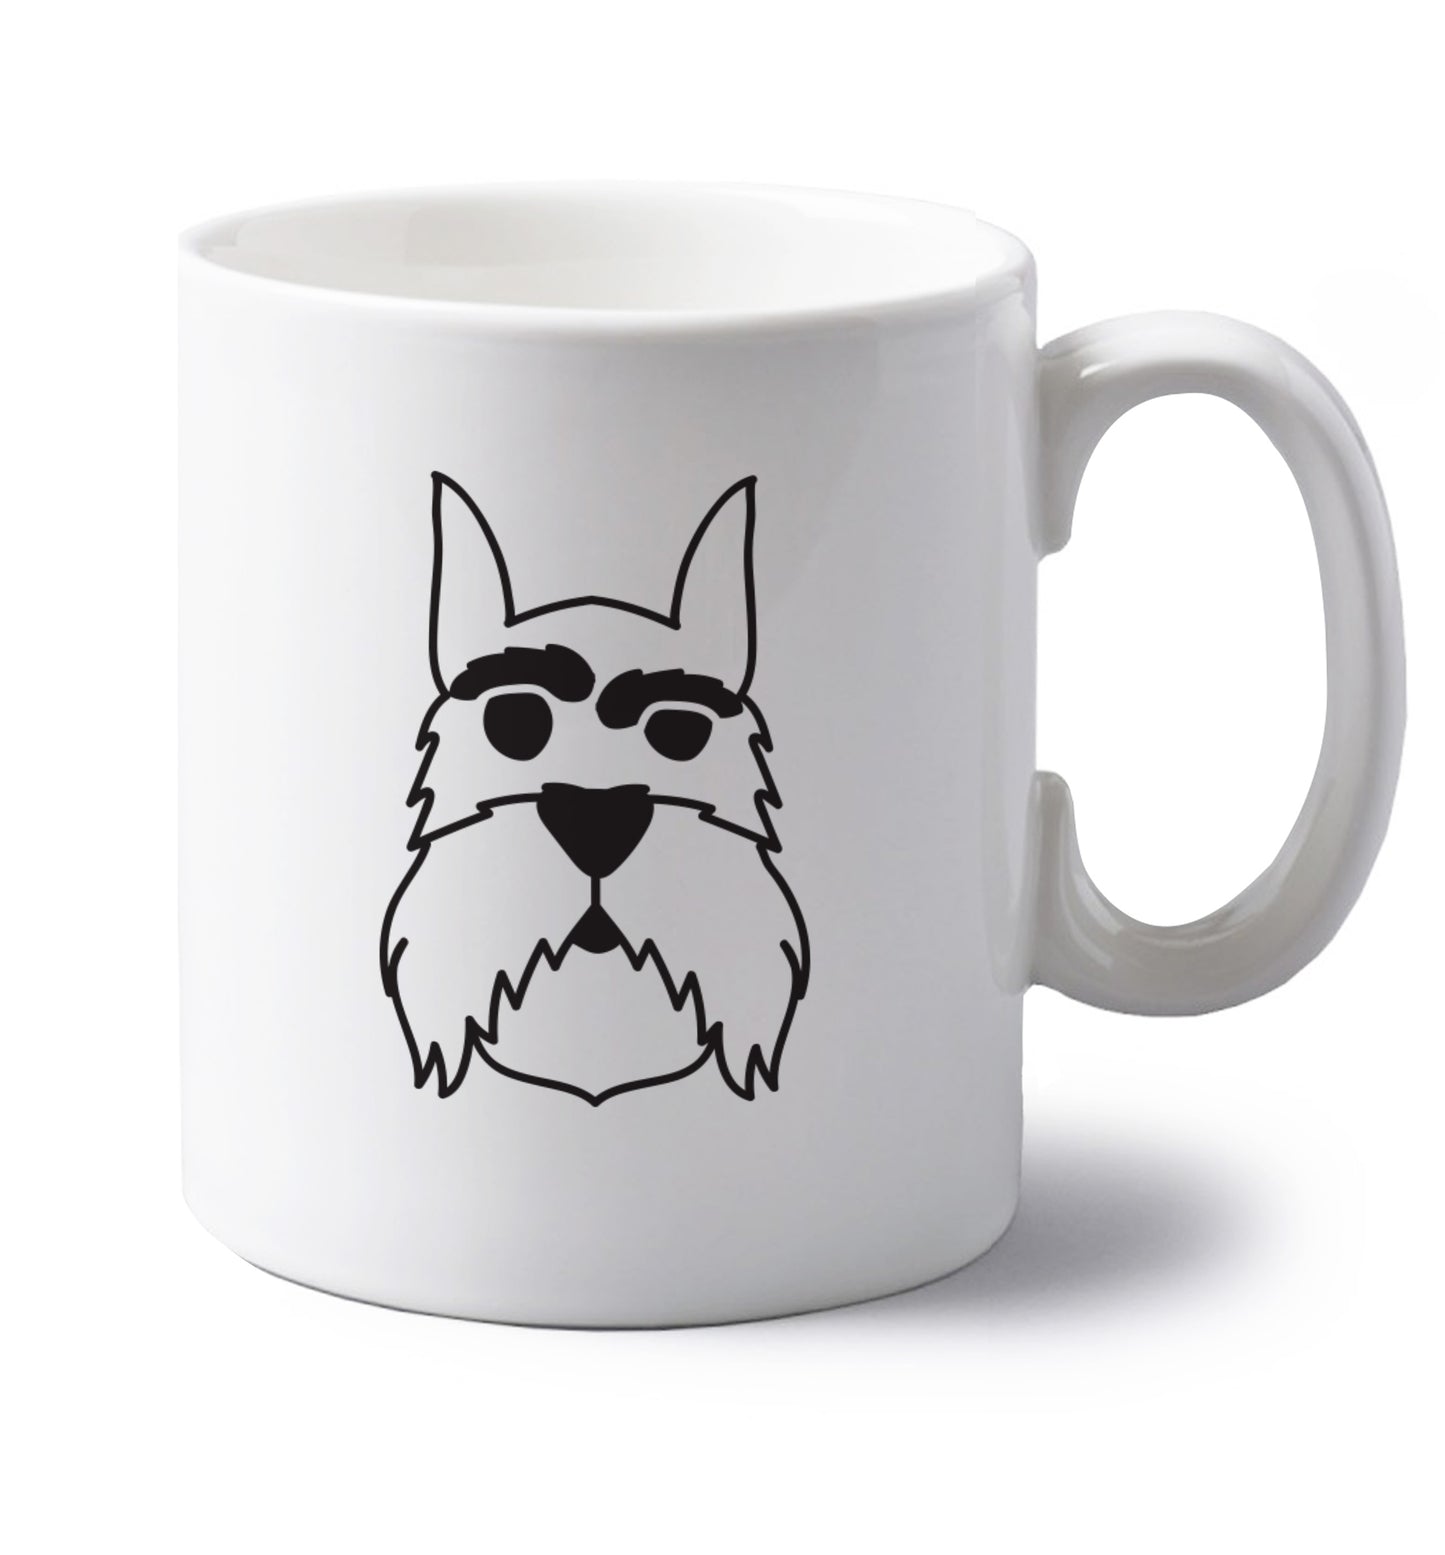 Schnauzer dog illustration left handed white ceramic mug 